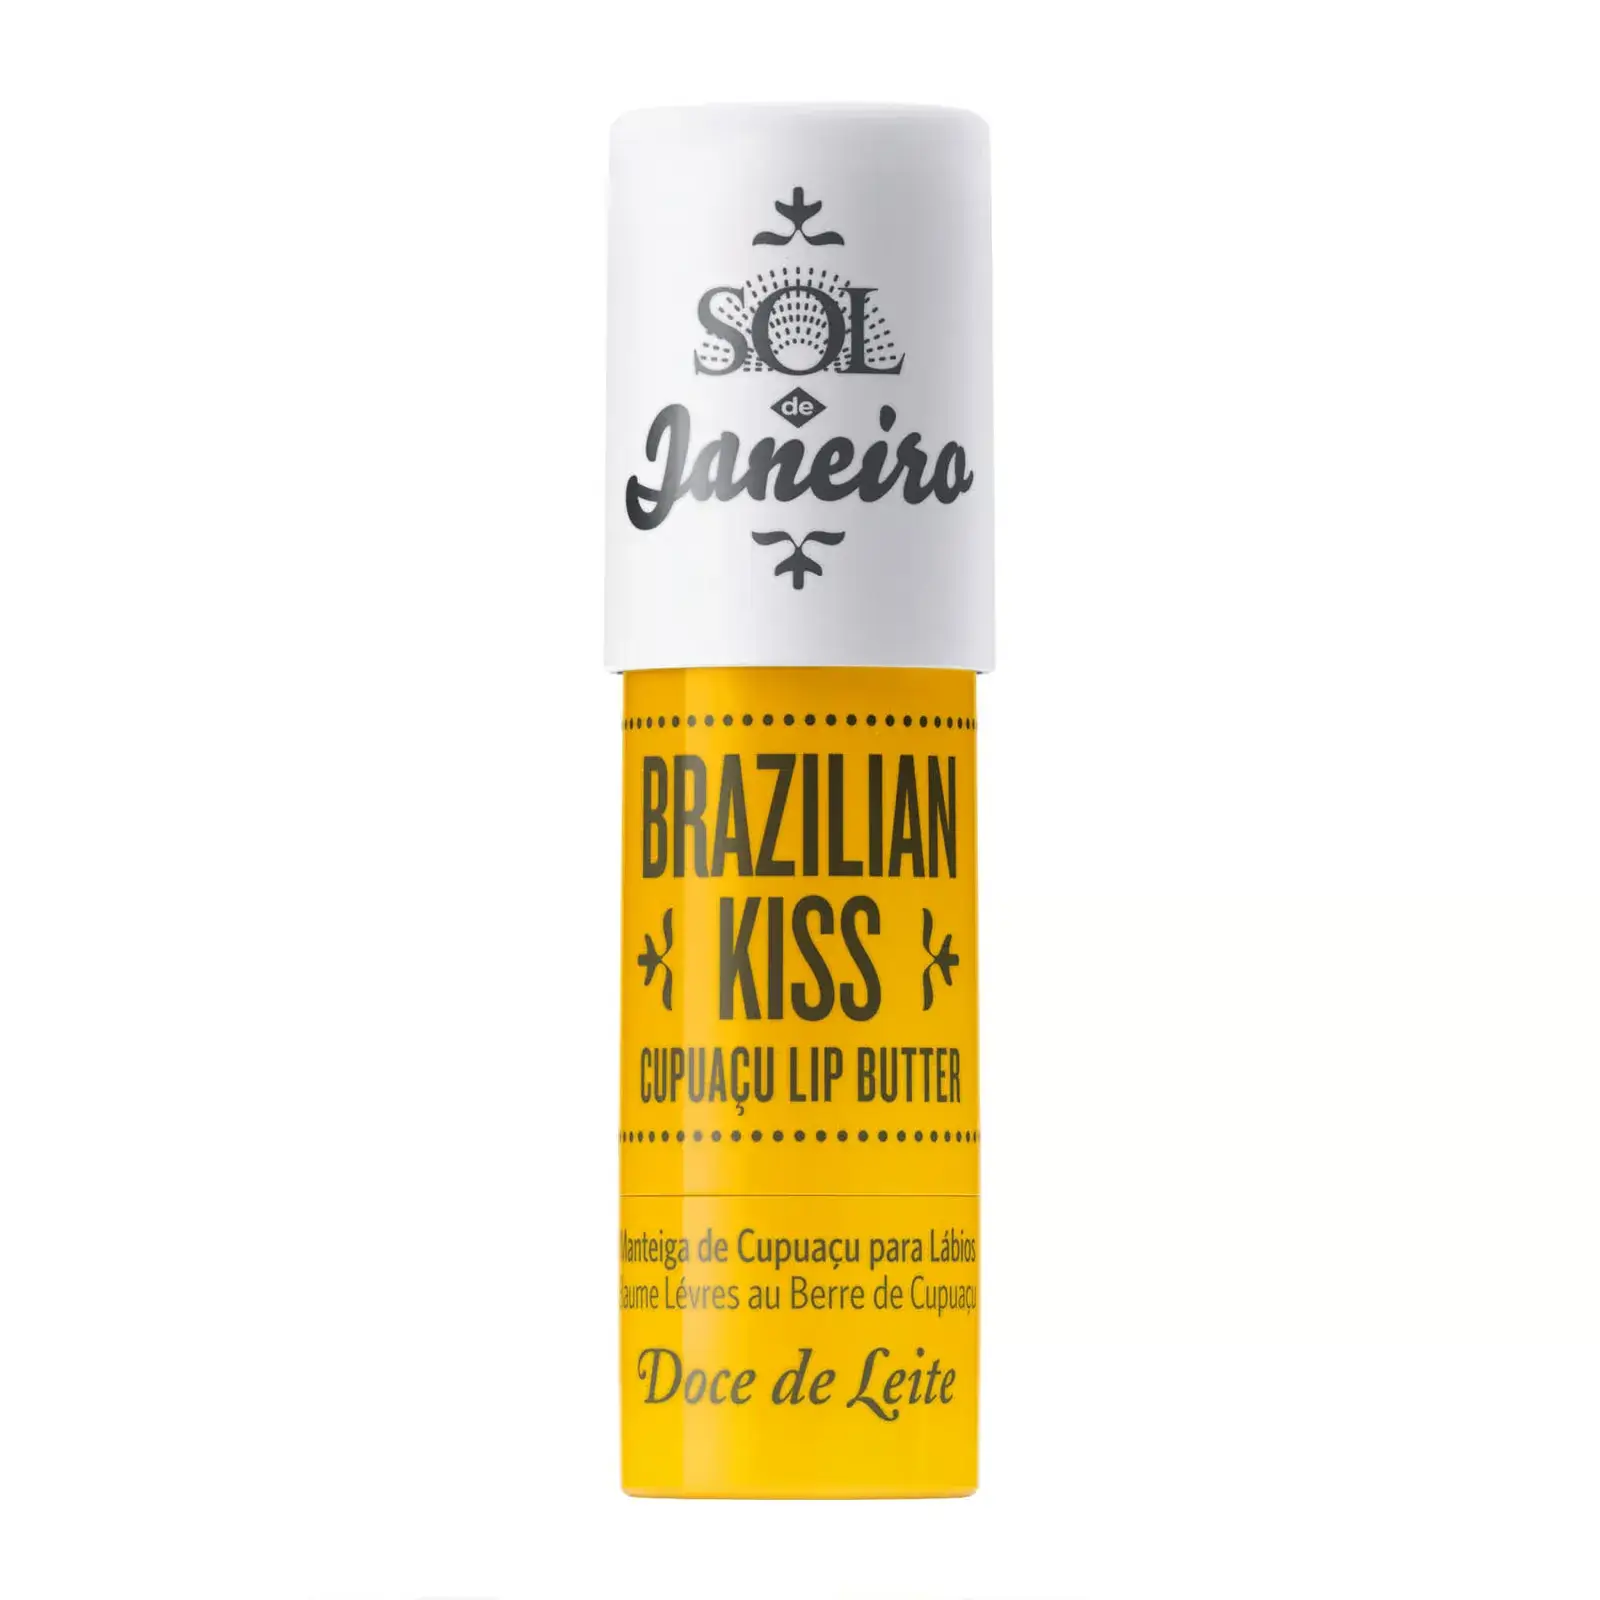 Sol de Janeiro Brazilian Kiss Cupuaçu Lip Butter 6.2g Discounts and Cashback